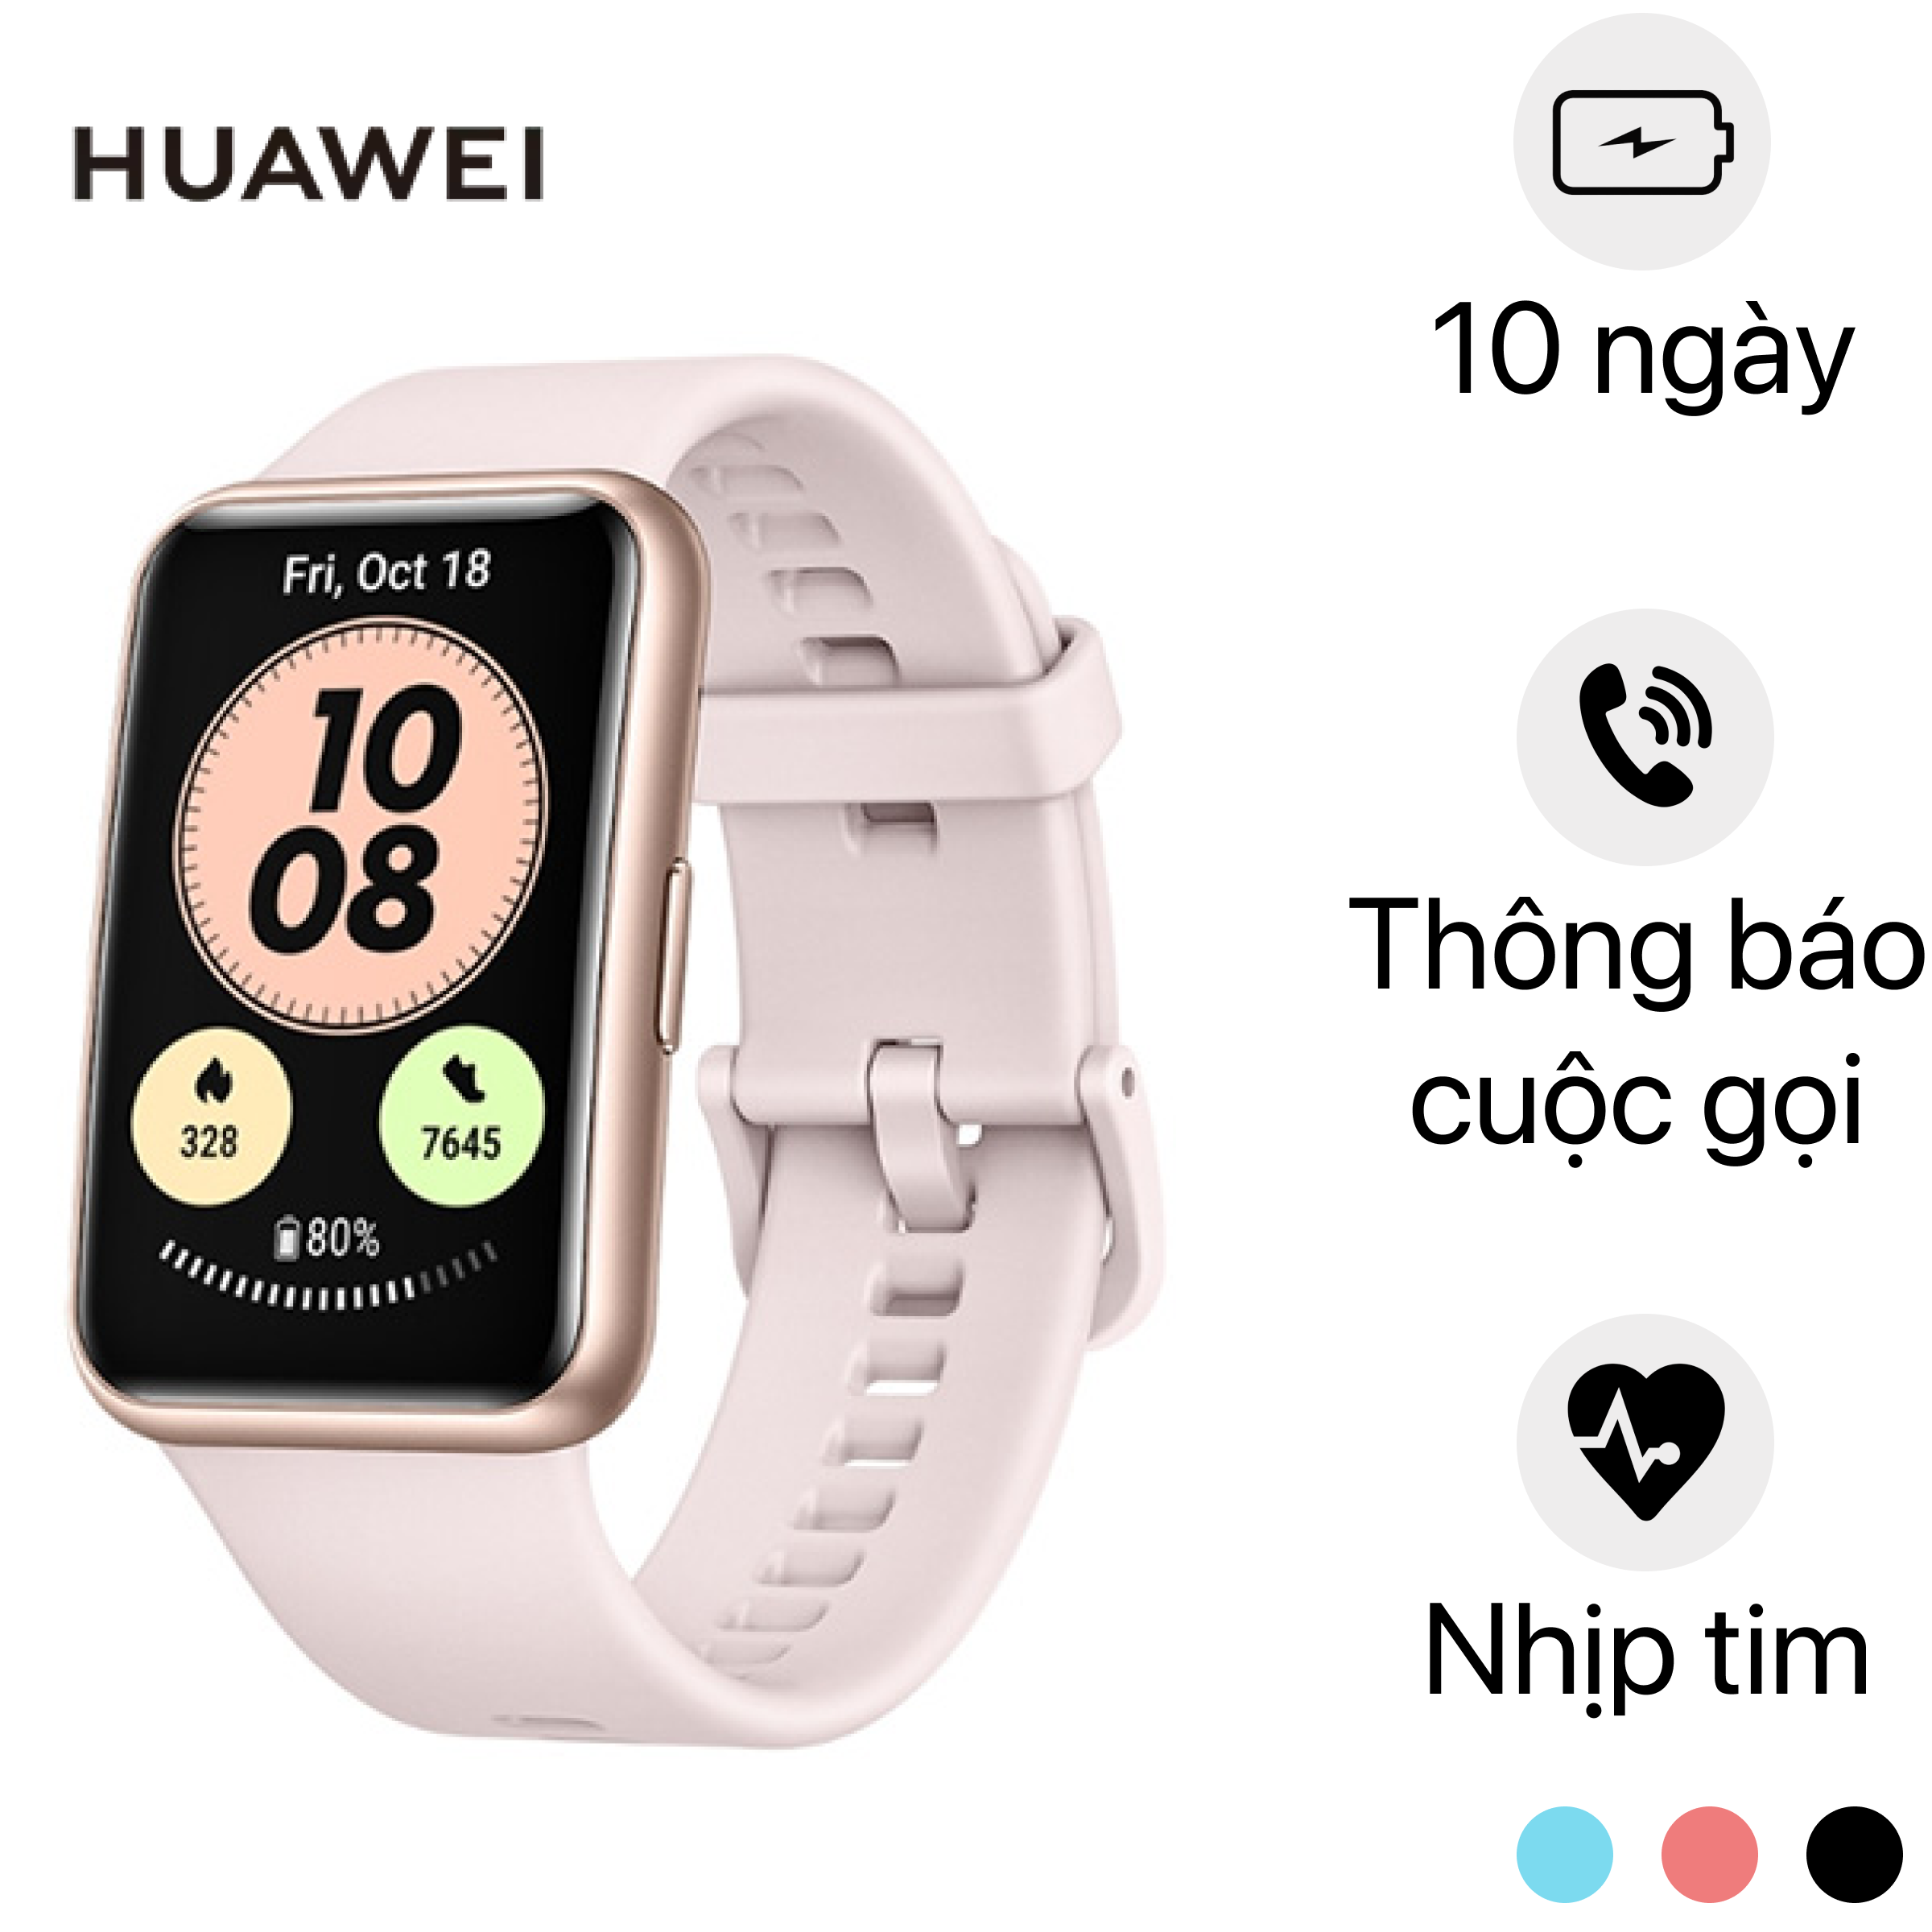 ﾄ雪ｻ渡g h盻� Huawei Watch Fit new Giﾃ｡ r蘯ｻ, khuy蘯ｿn mﾃ｣i t盻奏